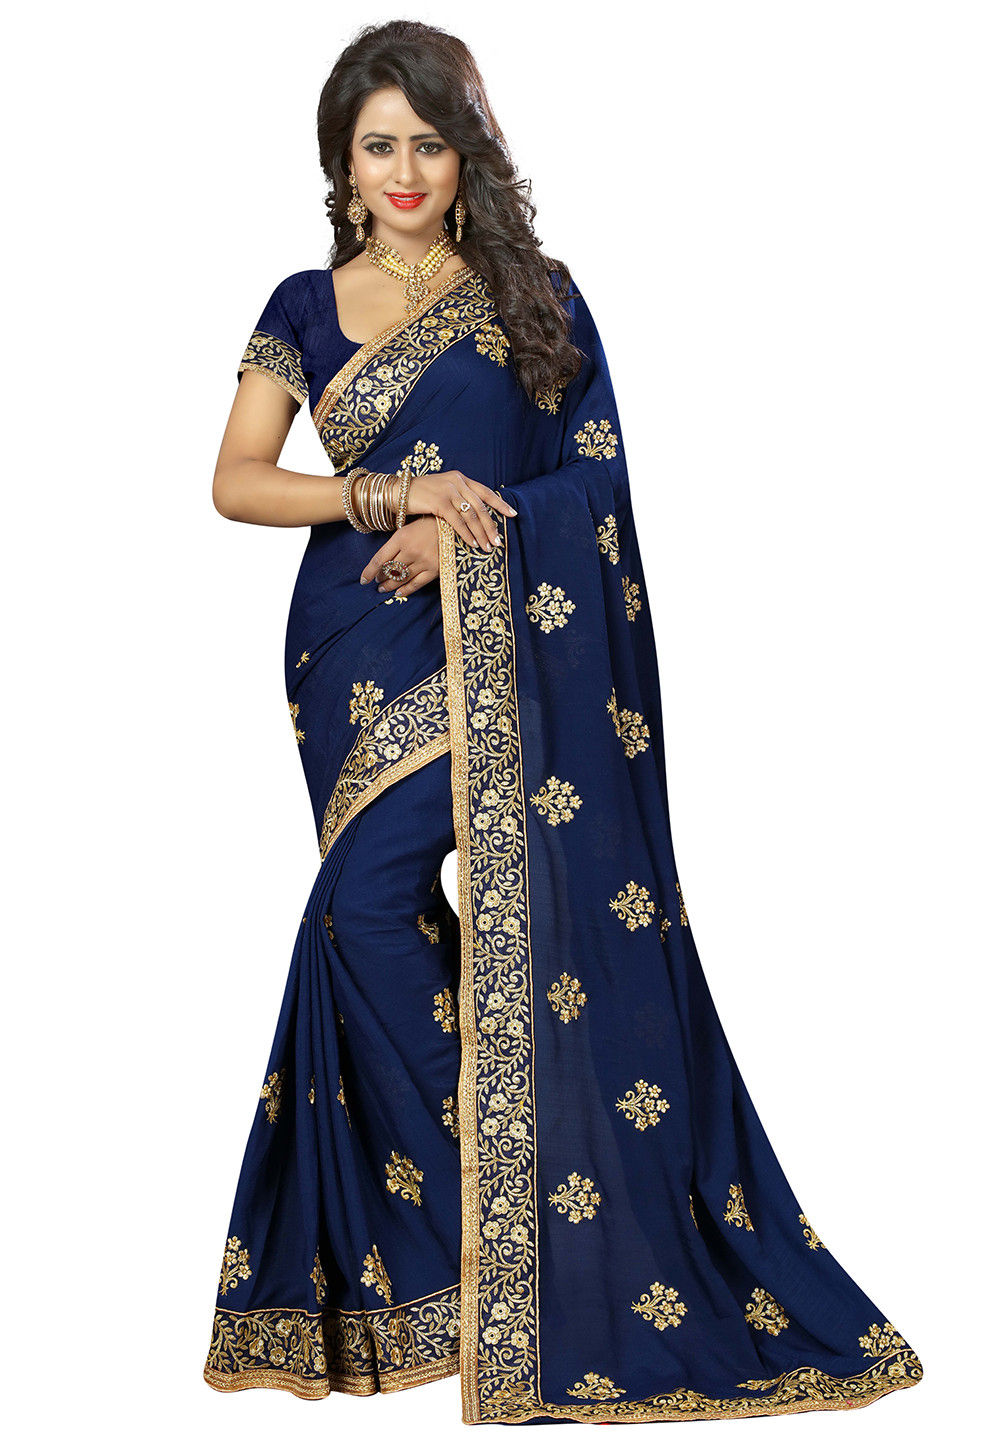 Indian NavyBlue Resham Zari Embroidery Bollywood Sari Georgette Party Wear Saree 